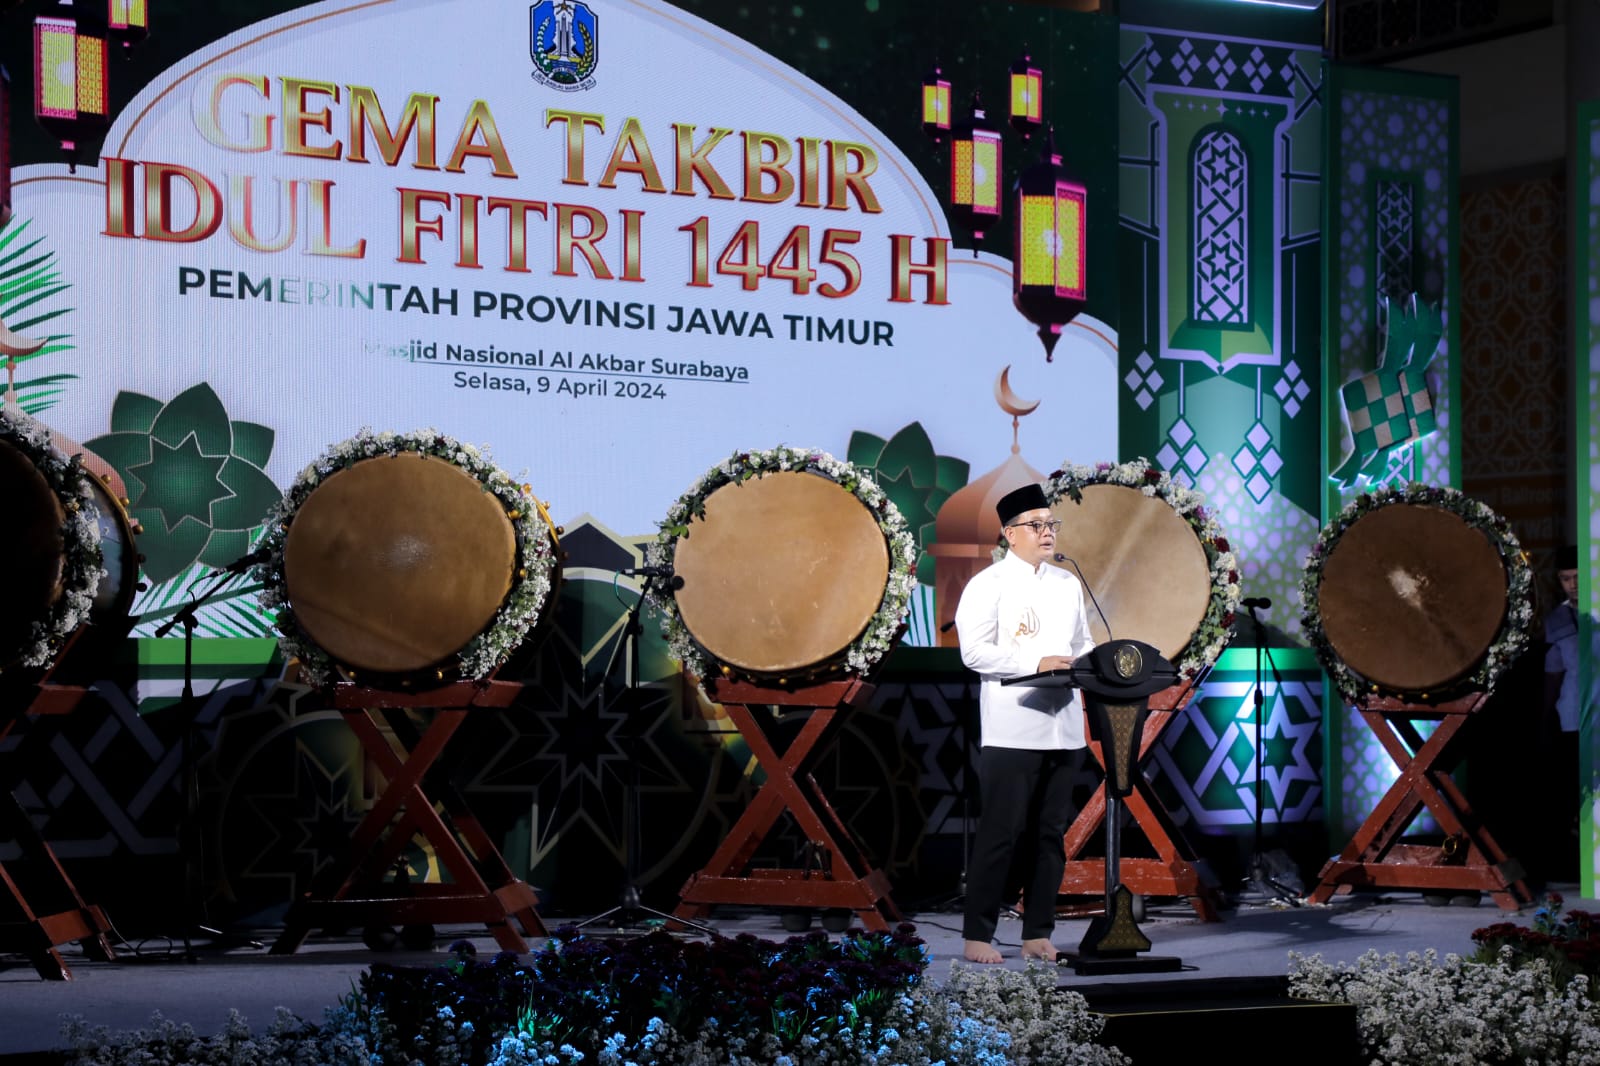 Gema Takbir Berkumandang di Masjid Al-Akbar Surabaya, PJ Gubernur Jatim Ungkap Syukur